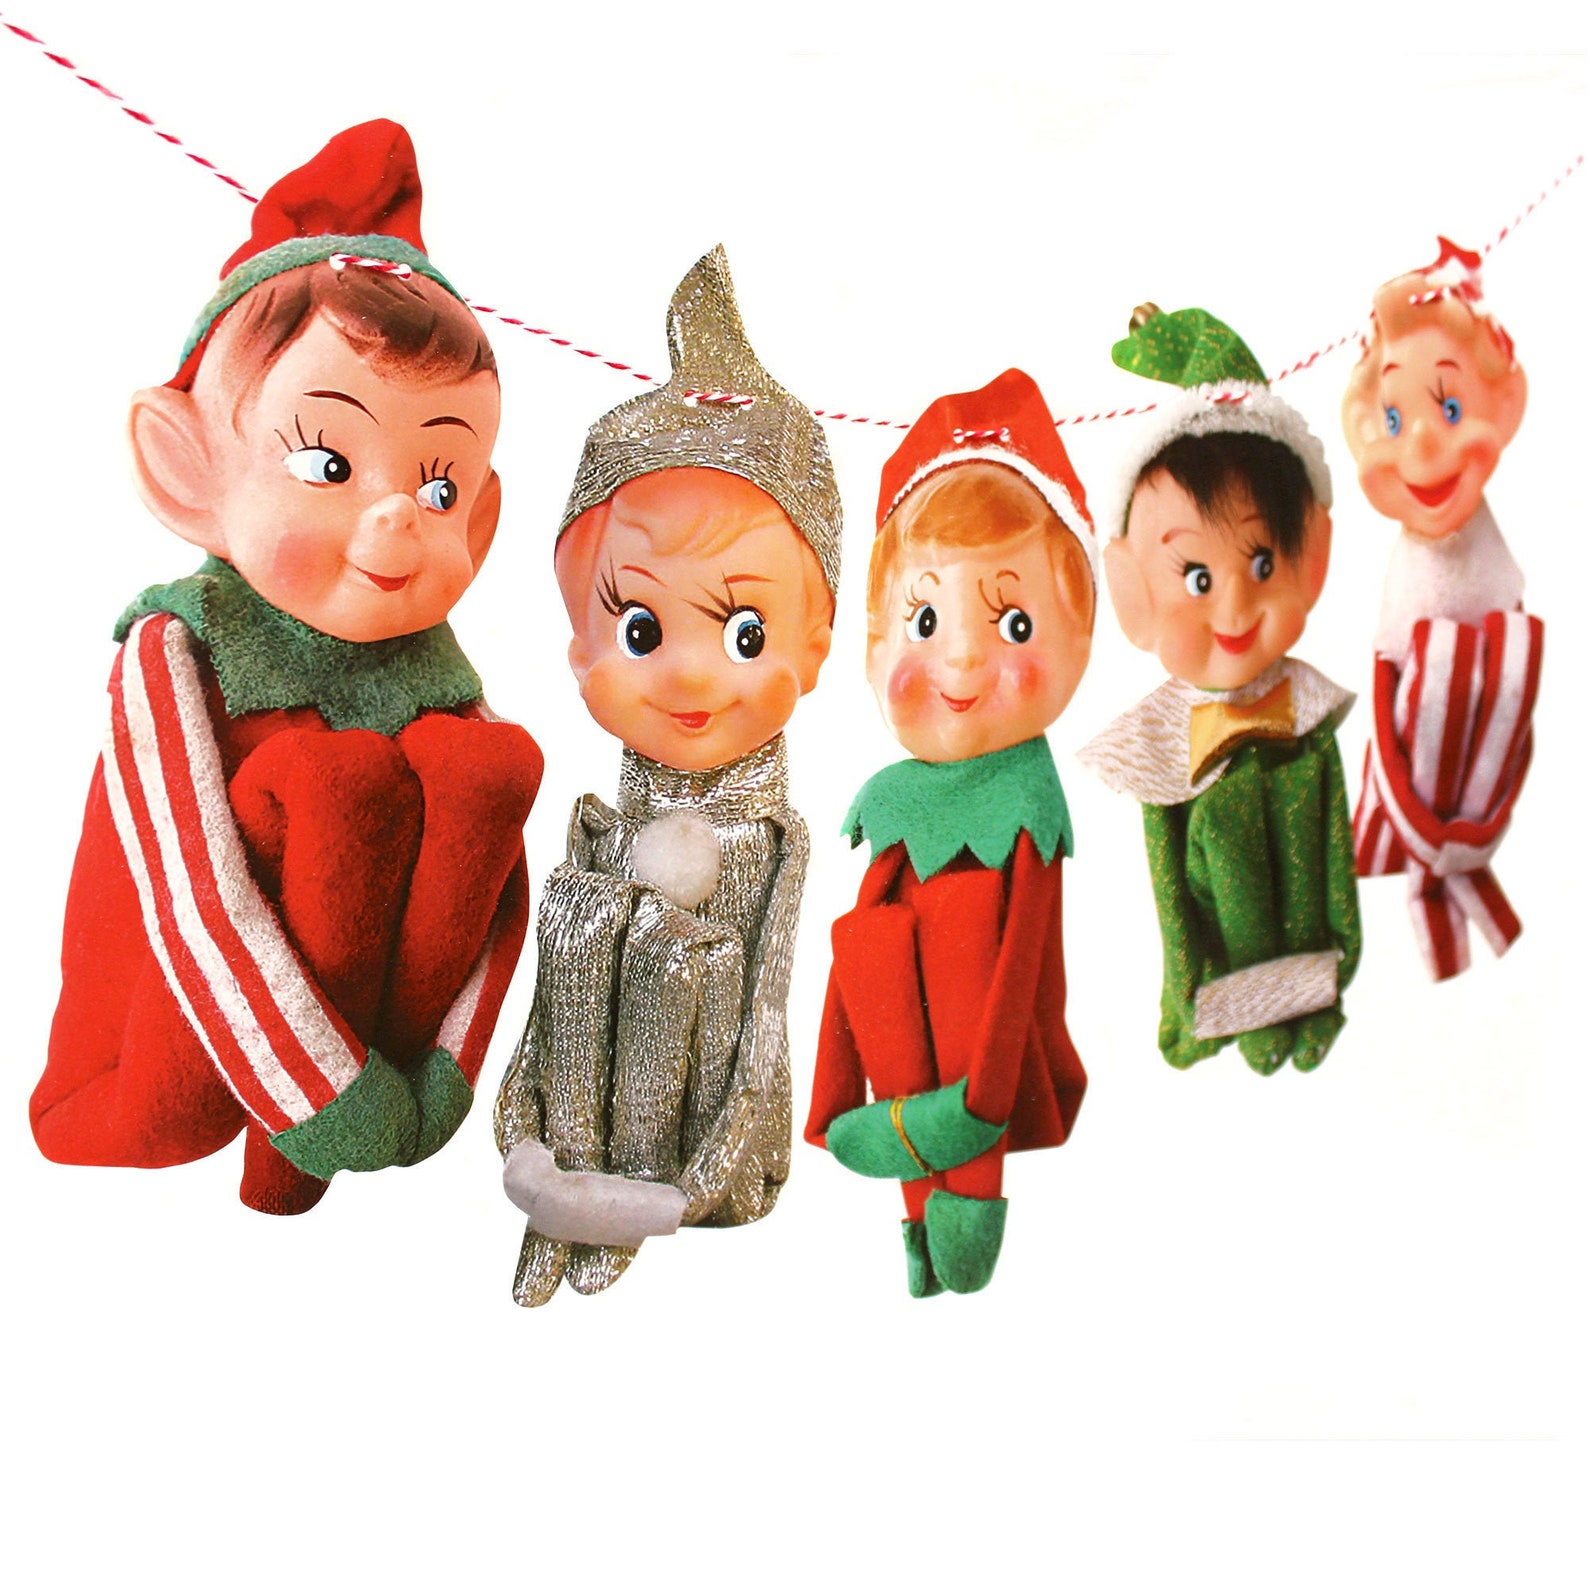 Vintage Christmas Elves Banner - photo reproductions on card stock - vintage Knee-Hugger Elf Pixie Garland - kitsch Christmas